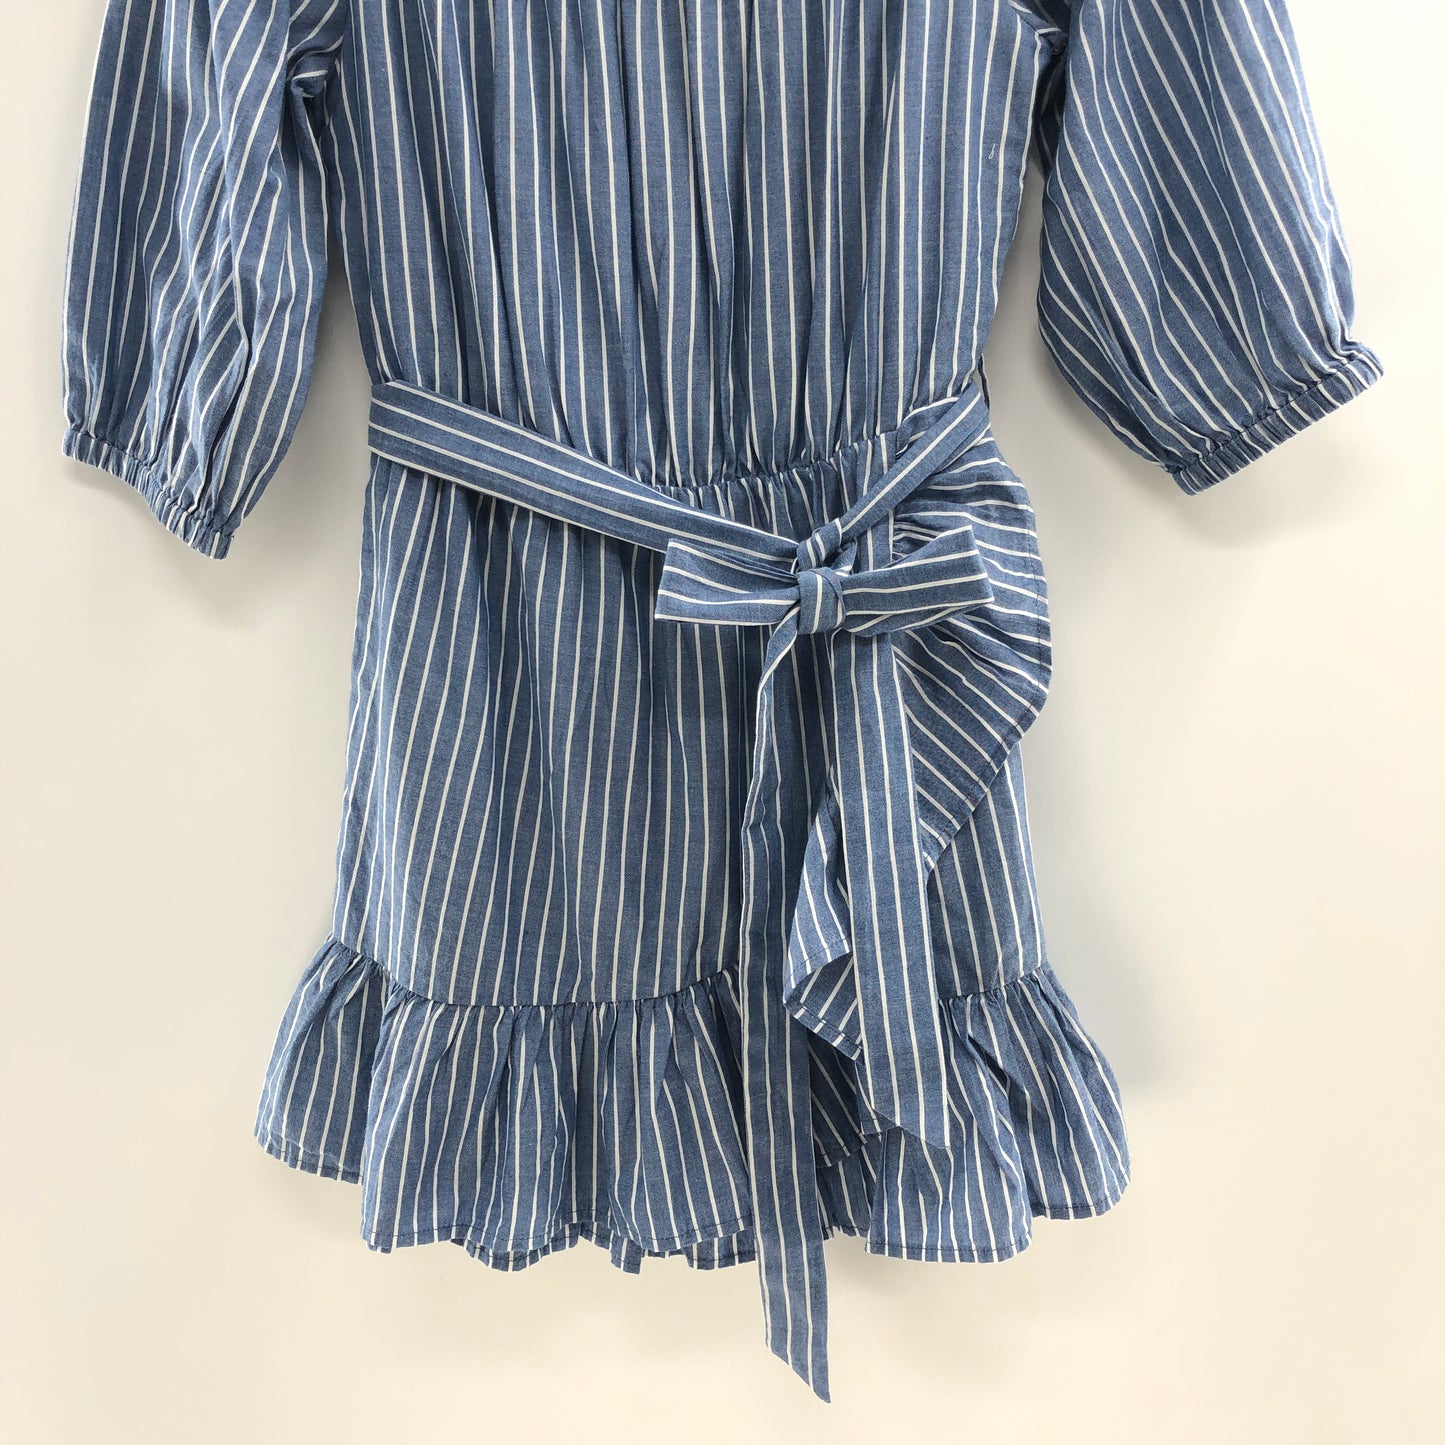 Tularosa Maida Ruffle Dress in Blue & White Stripe S